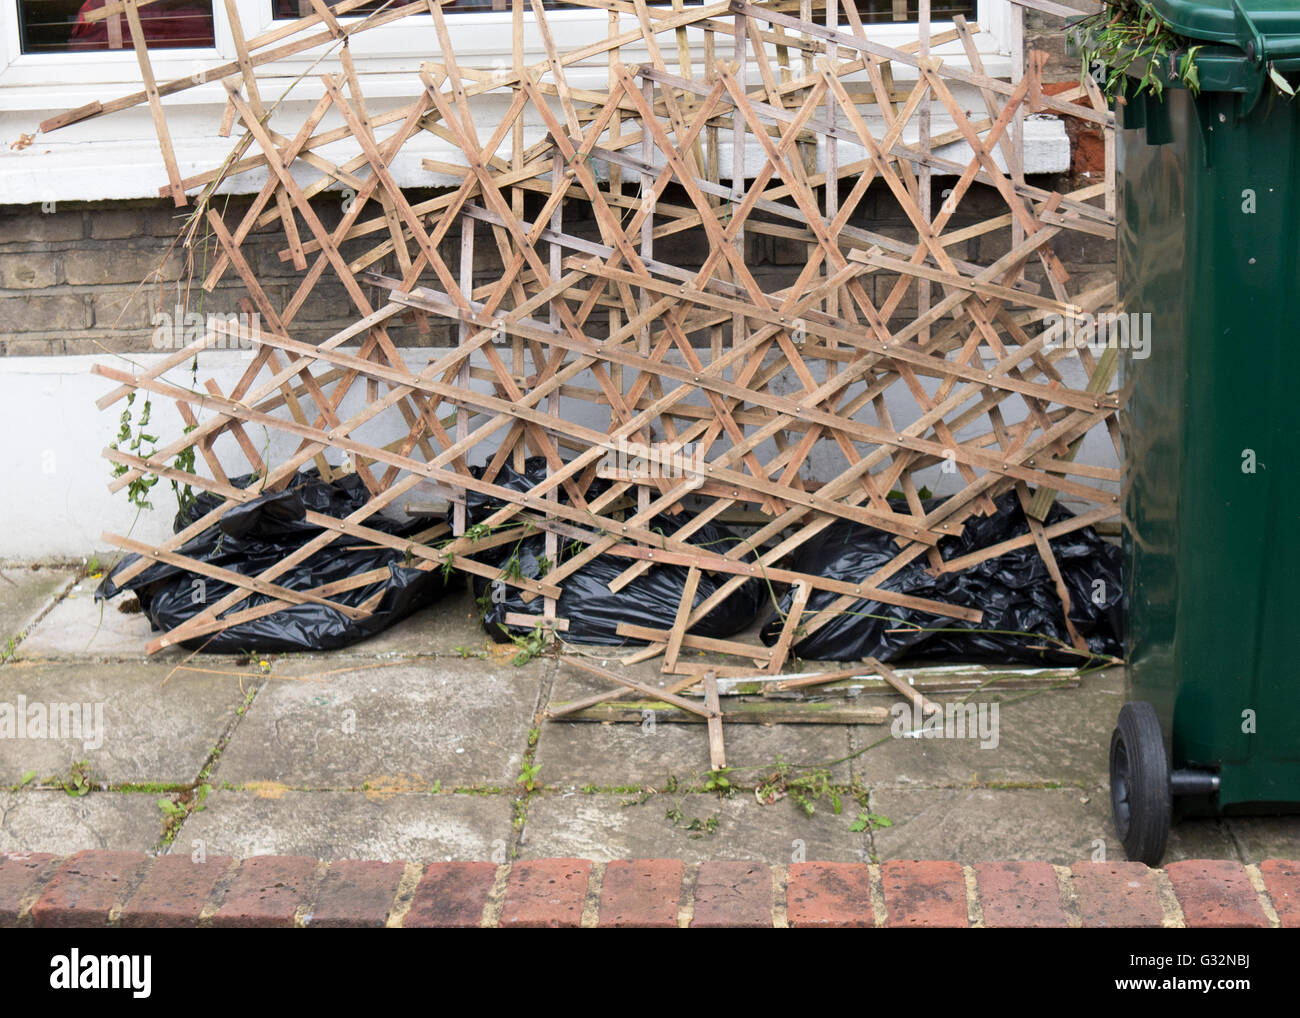 Broken garden trellis panels dumped in front a house. Stock Photo